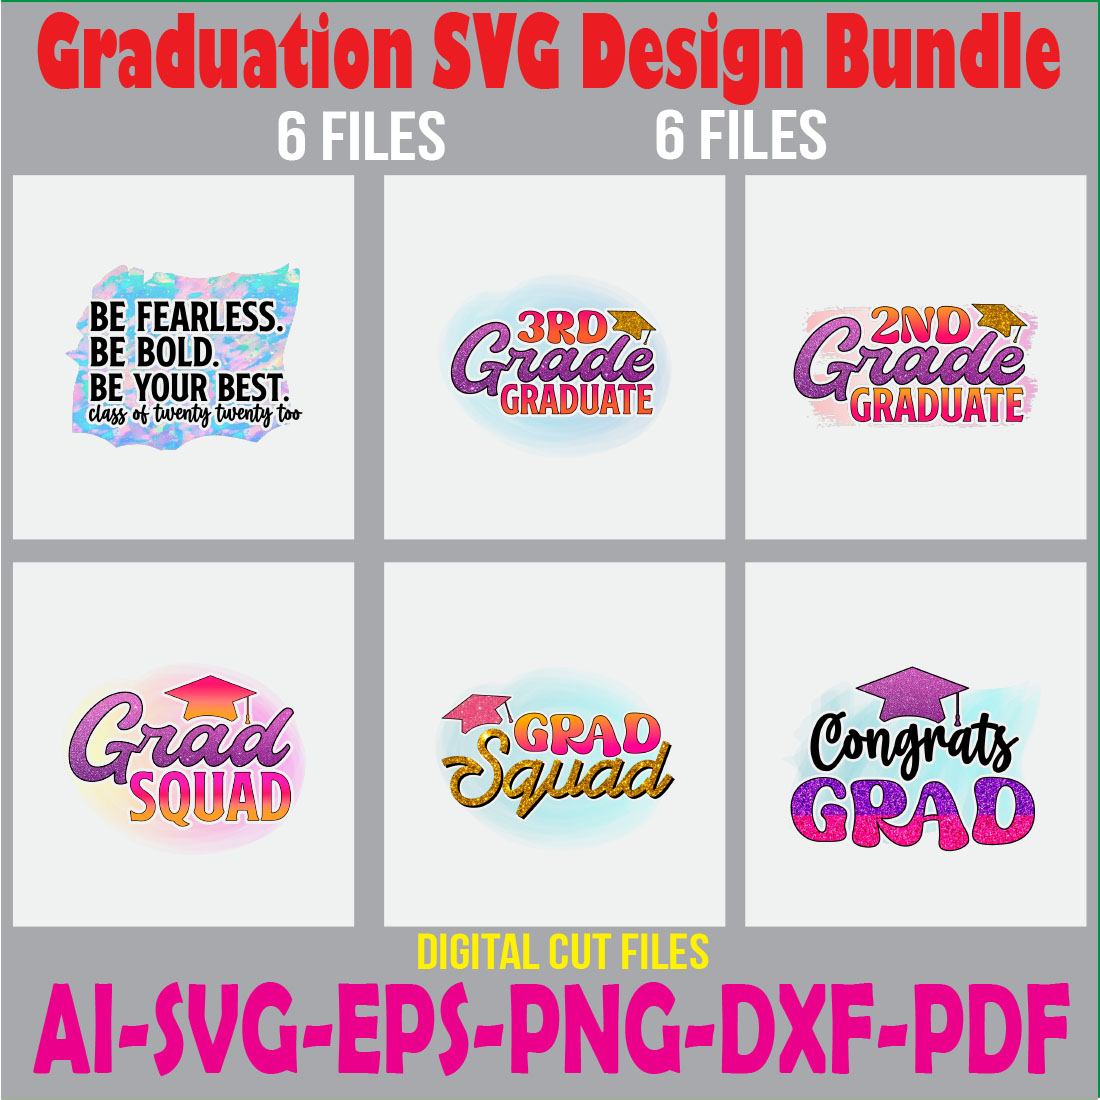 Graduation SVG Design Bundle cover image.